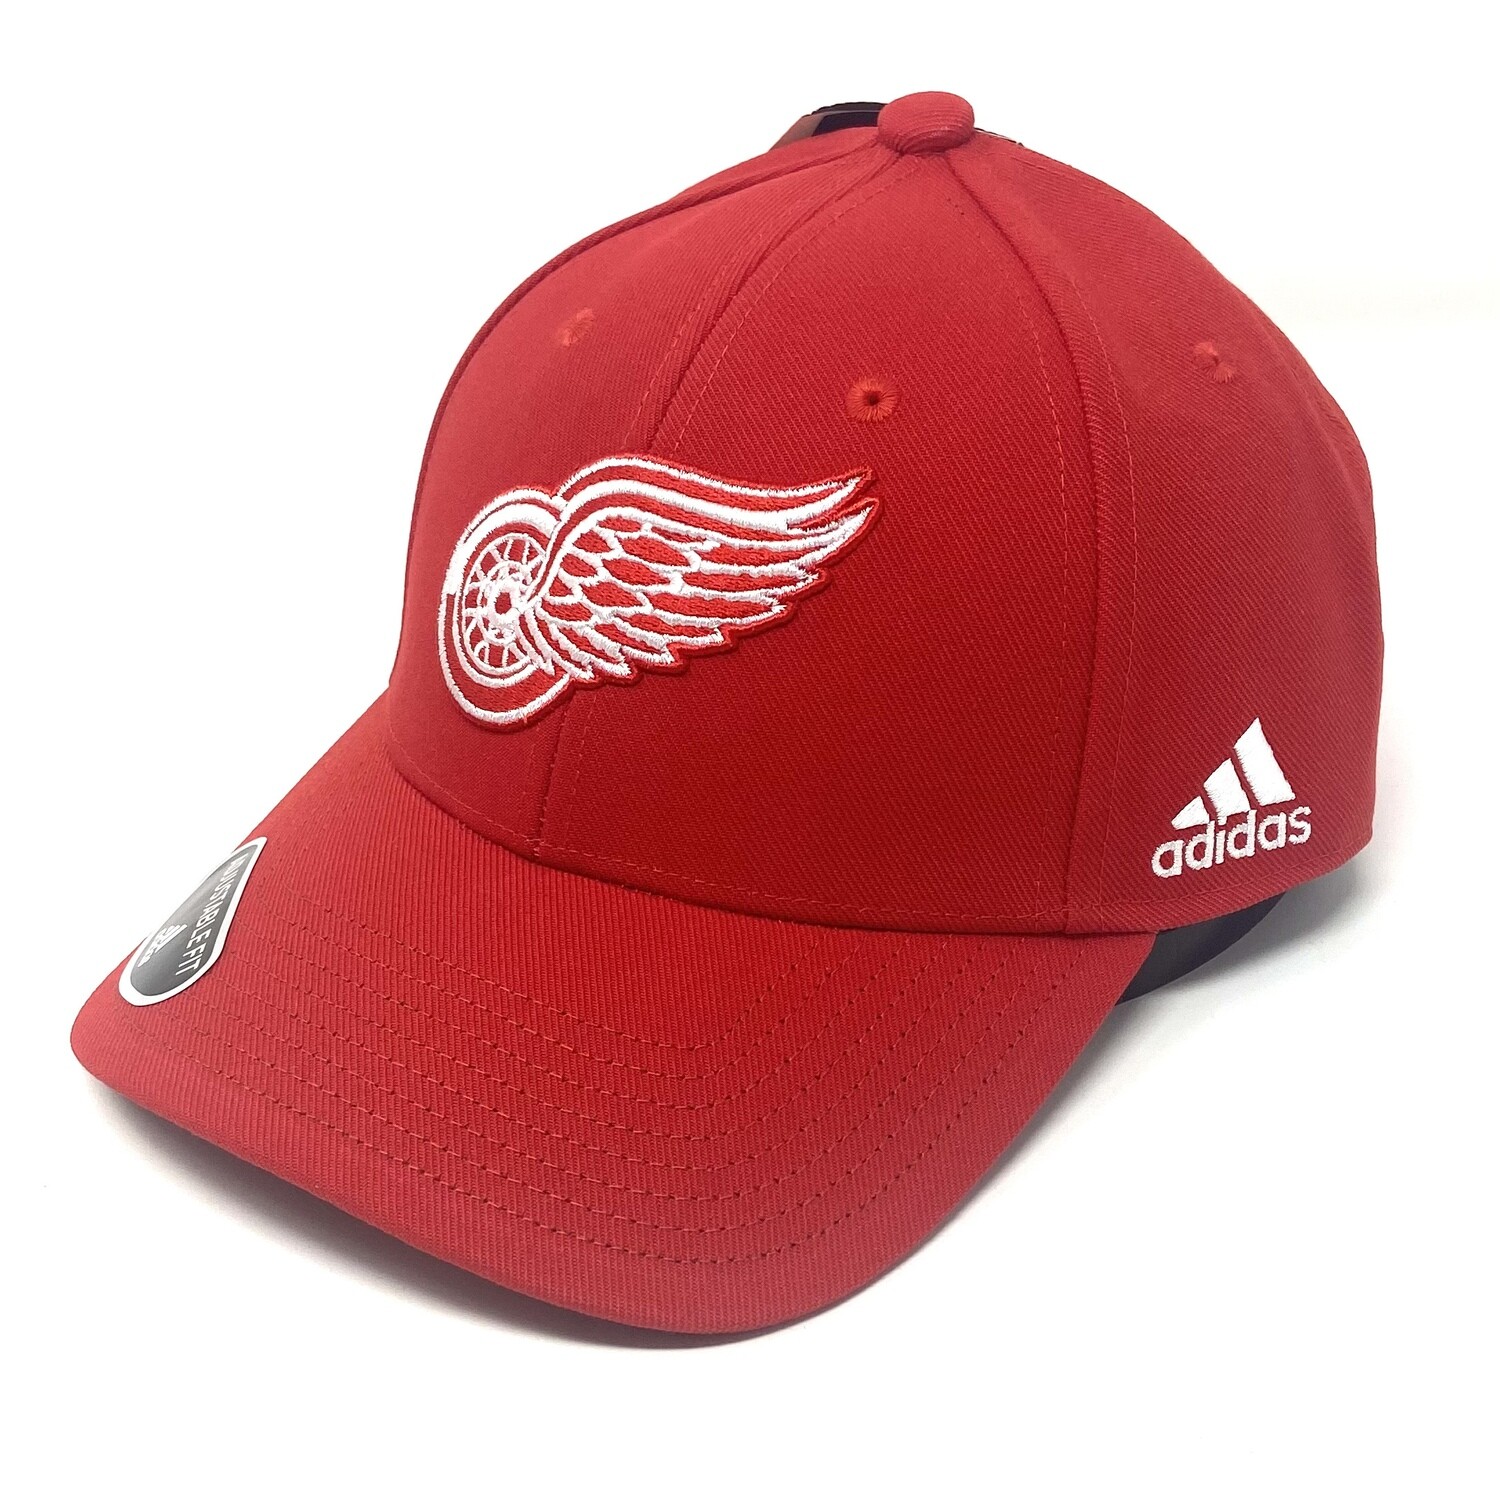 Detroit Red Wings Men's Adidas Adjustable Hat